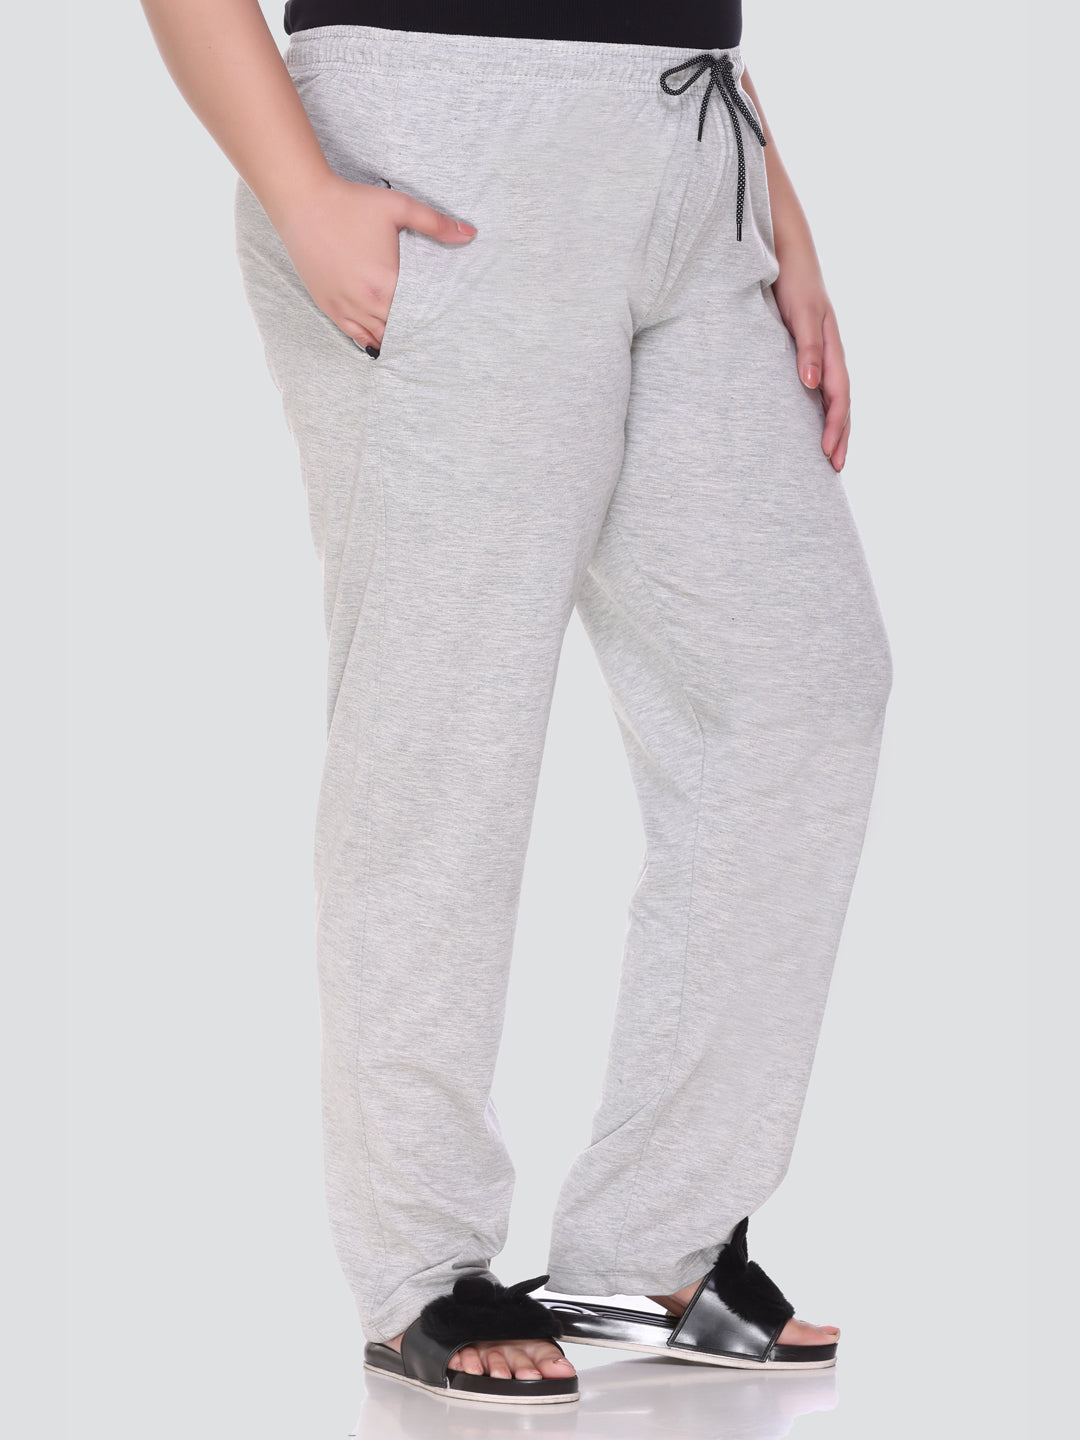 Plus Size Cotton Track Pants For Women - Grey, Women Track Pant